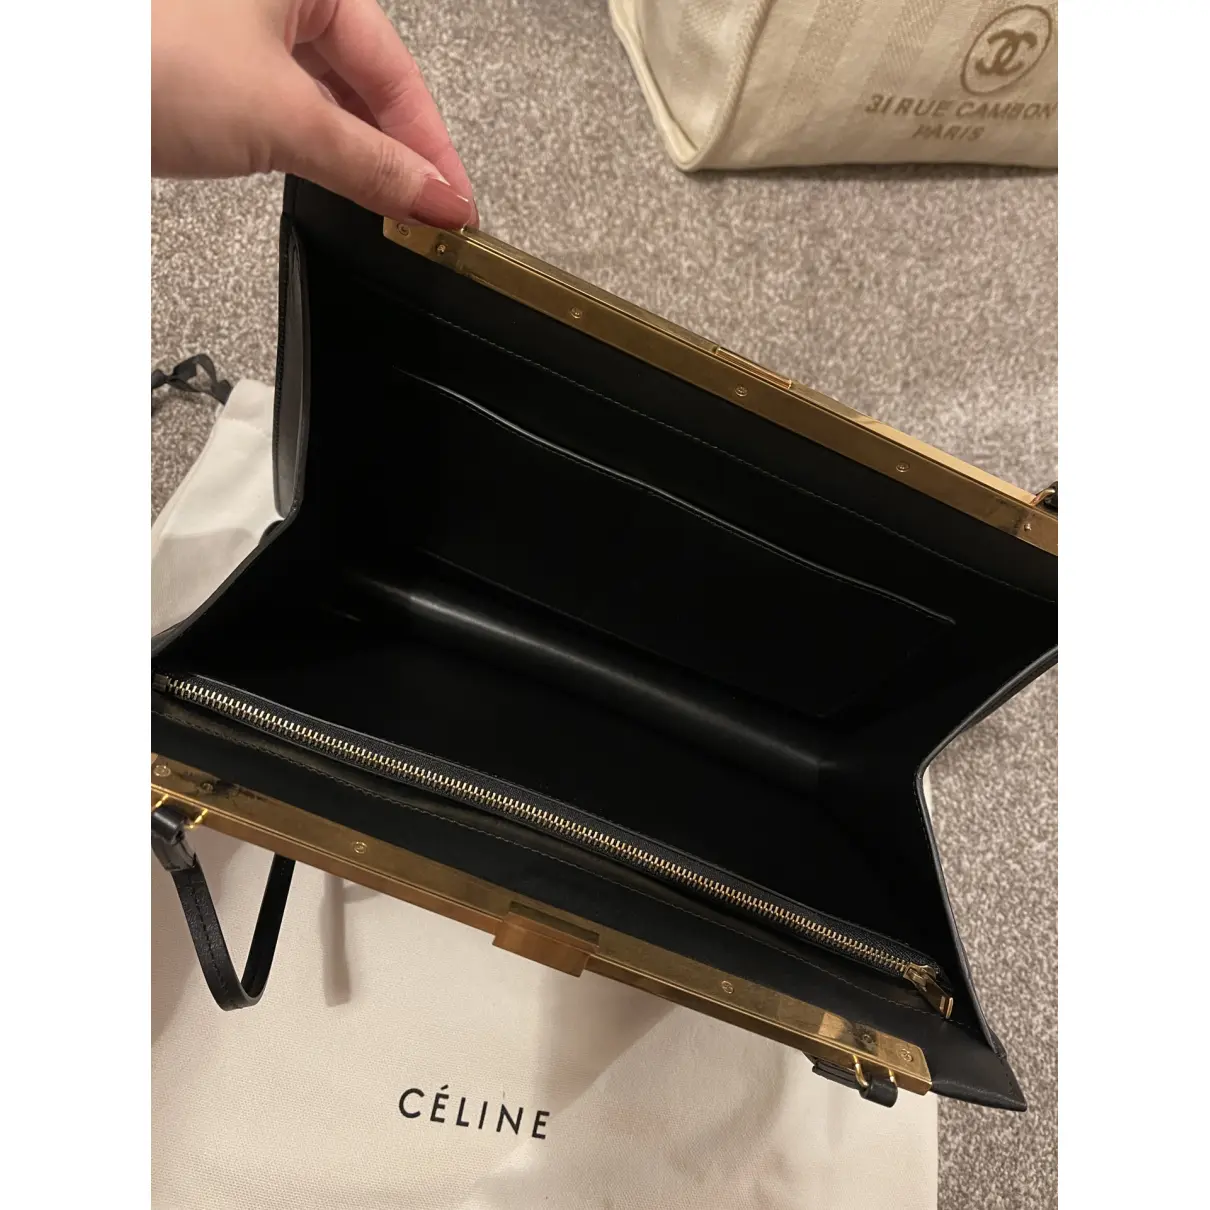 Clasp leather handbag Celine